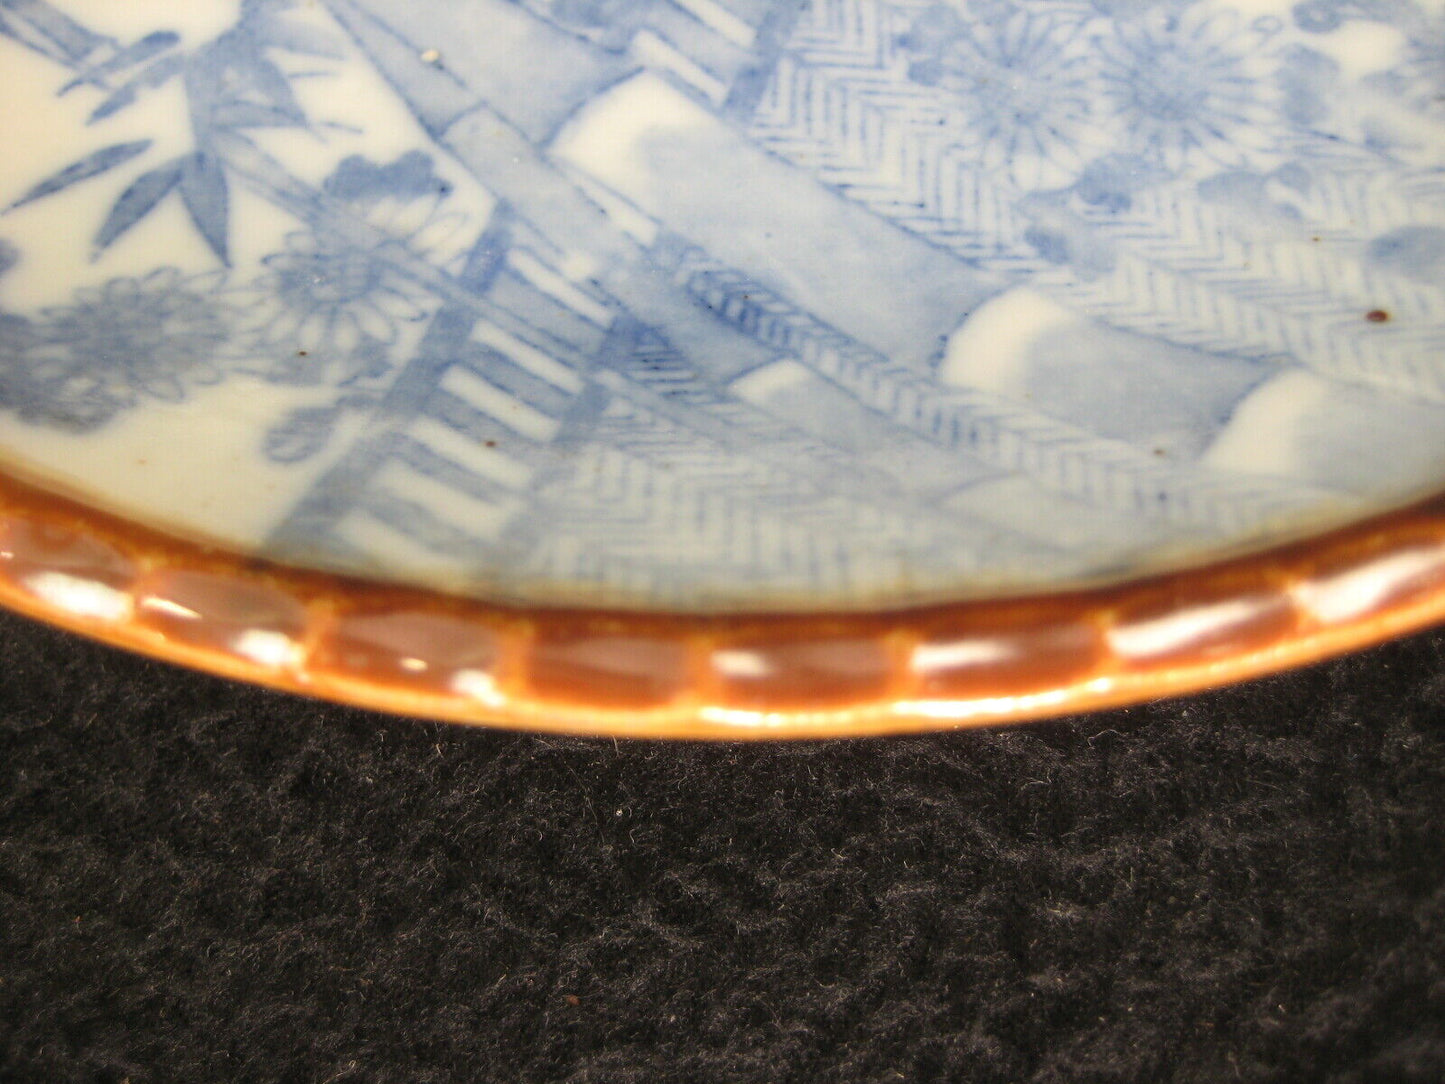 Vintage Japanese Ceramic Dish Plate Bamboo Chrysanthemum Flowers 7.25"